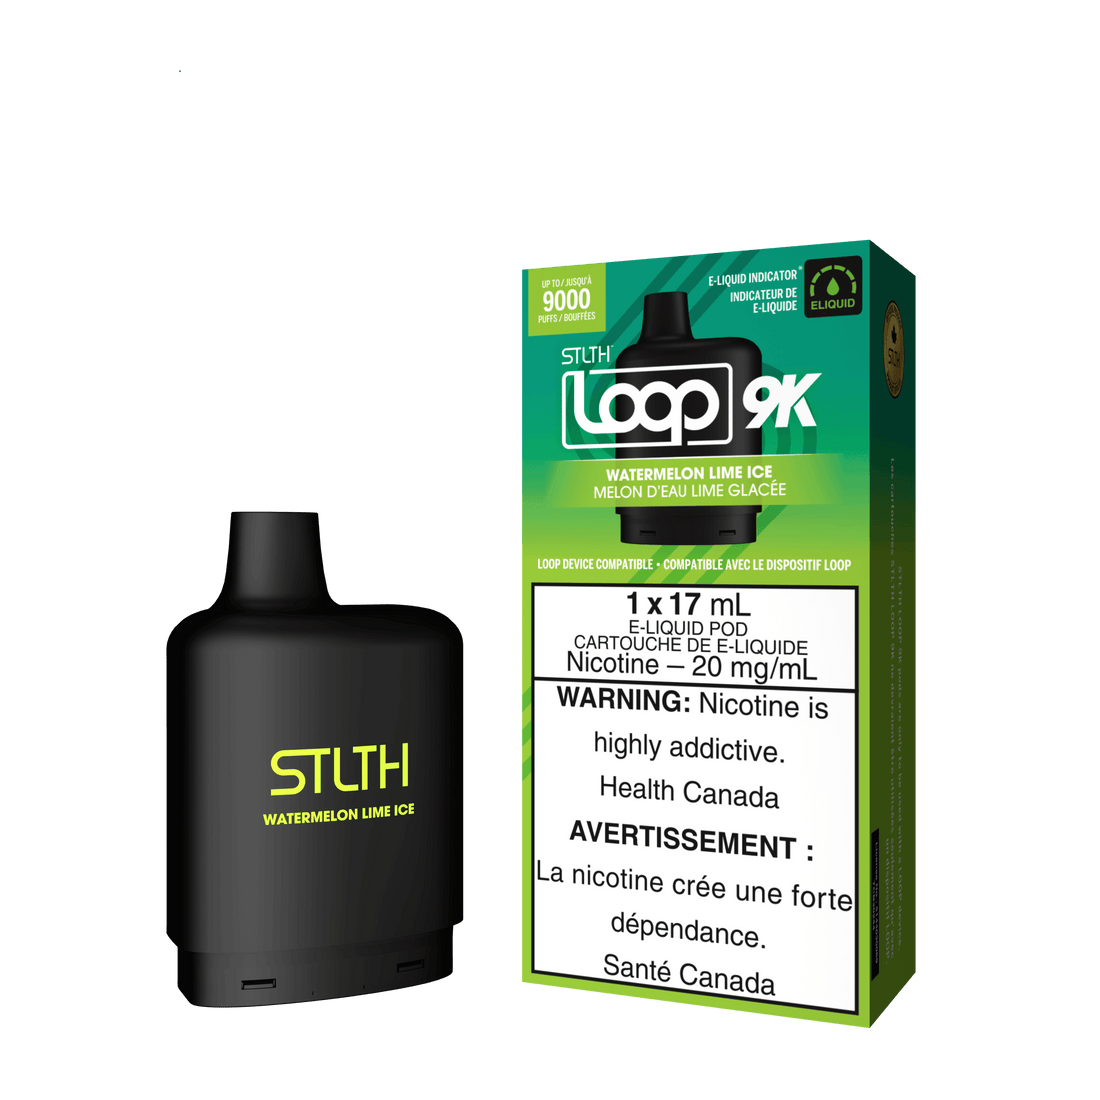 STLTH Loop 9K - Watermelon Lime Ice - Vapor Shoppe